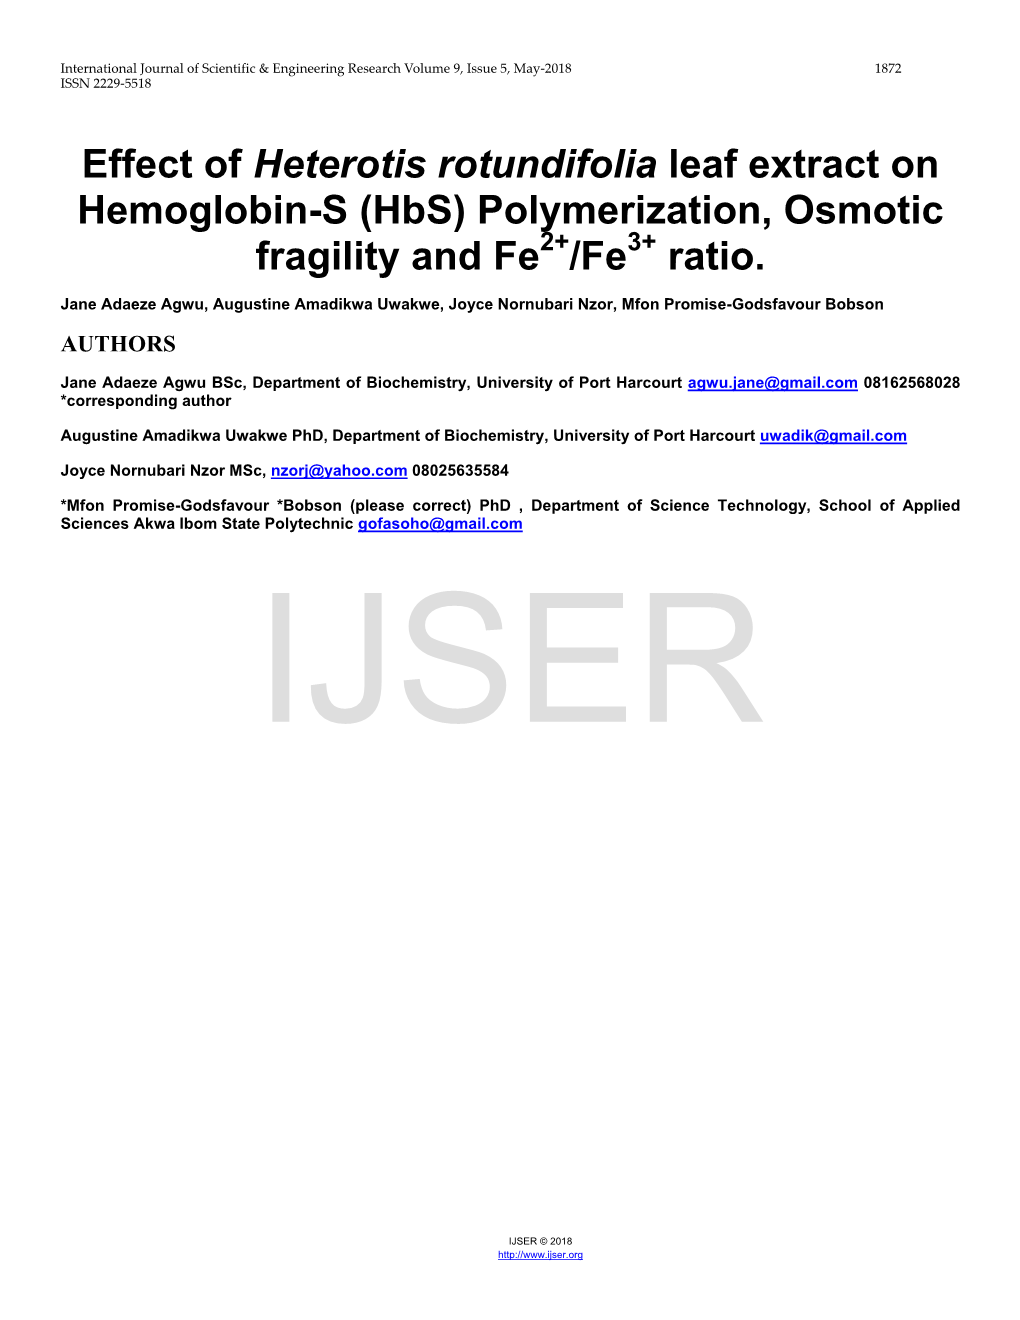 Effect of Heterotis Rotundifolia Crude Leaf Extract on Hb-S Erythrocyte Polymerization, Osmotic Fragility and Fe2+/Fe3+ Ratio